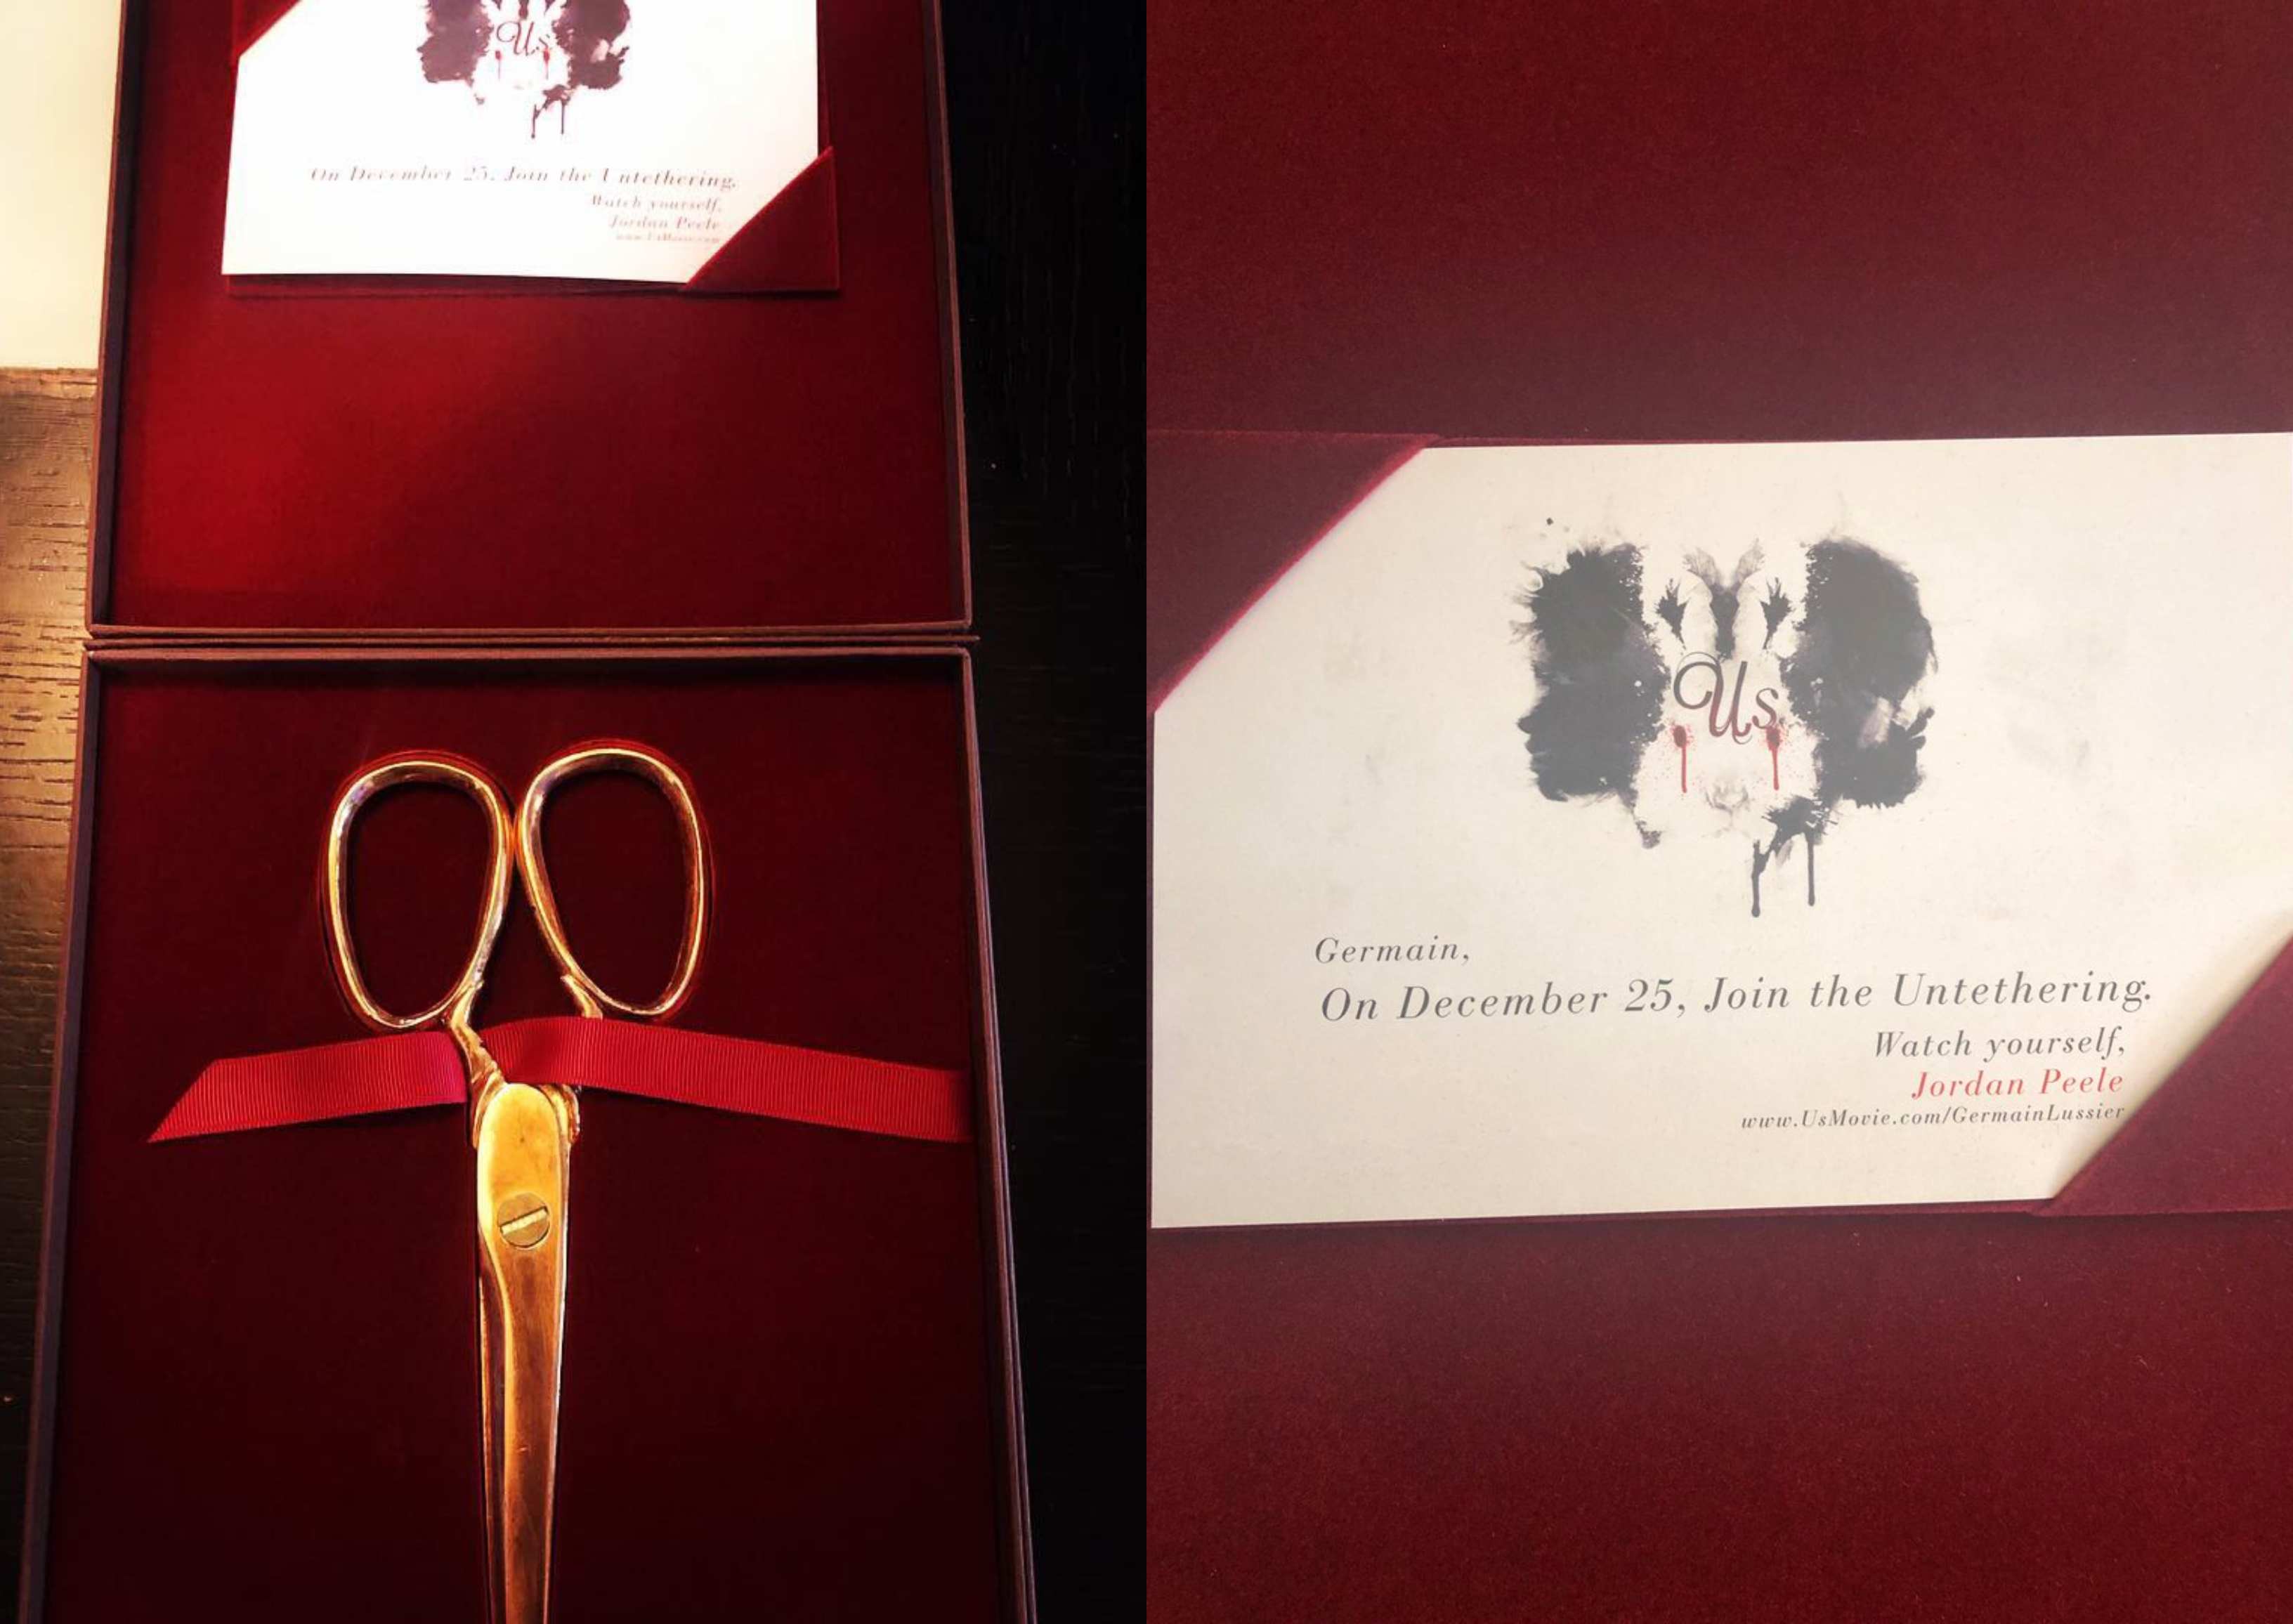 Jordan Peele Is Mailing People Gold Scissors To Promote His New Movie ‘Us’